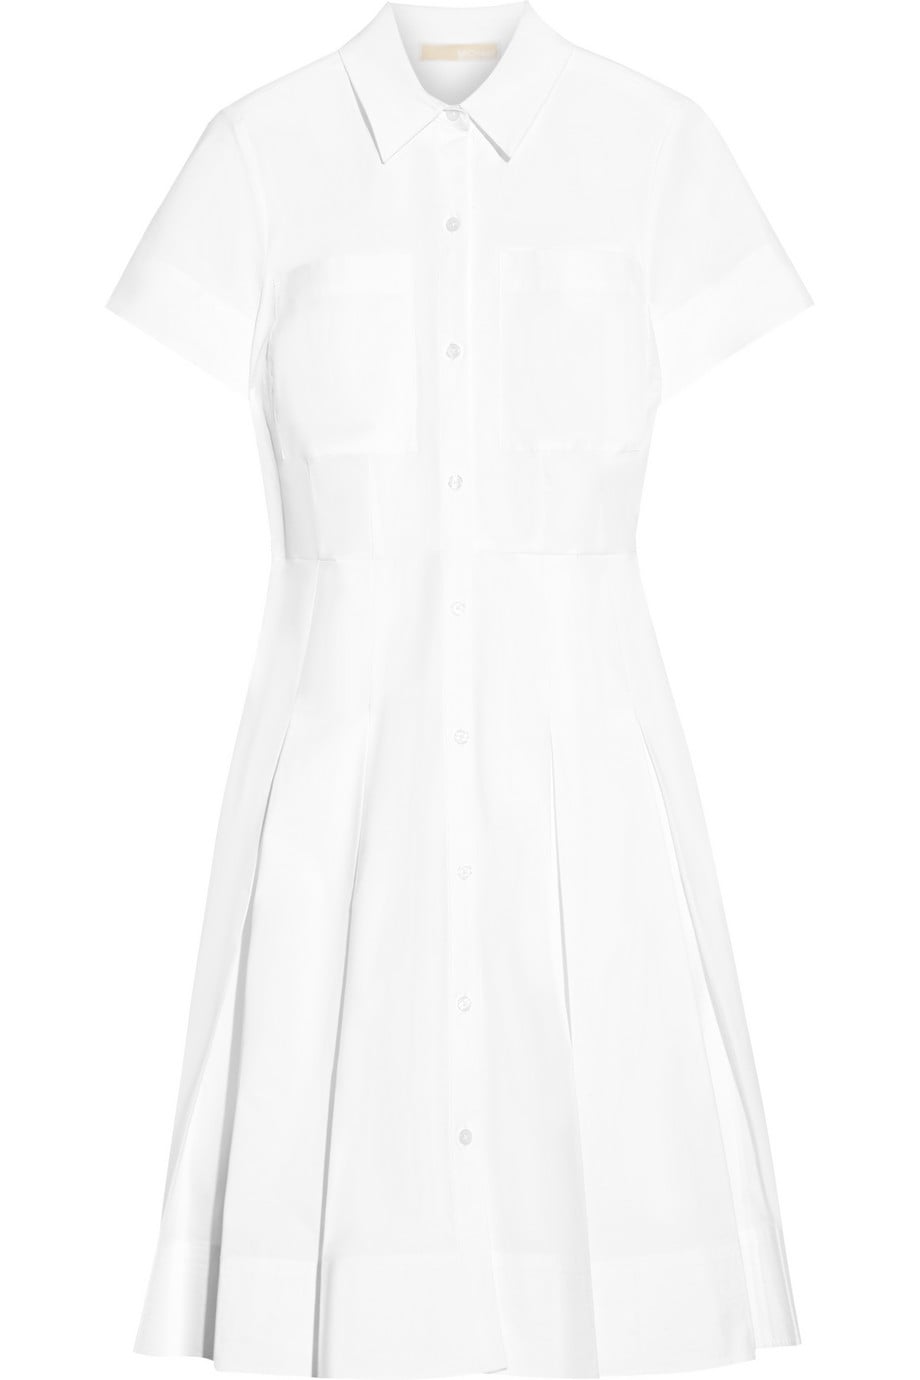 michael kors white shirt dress